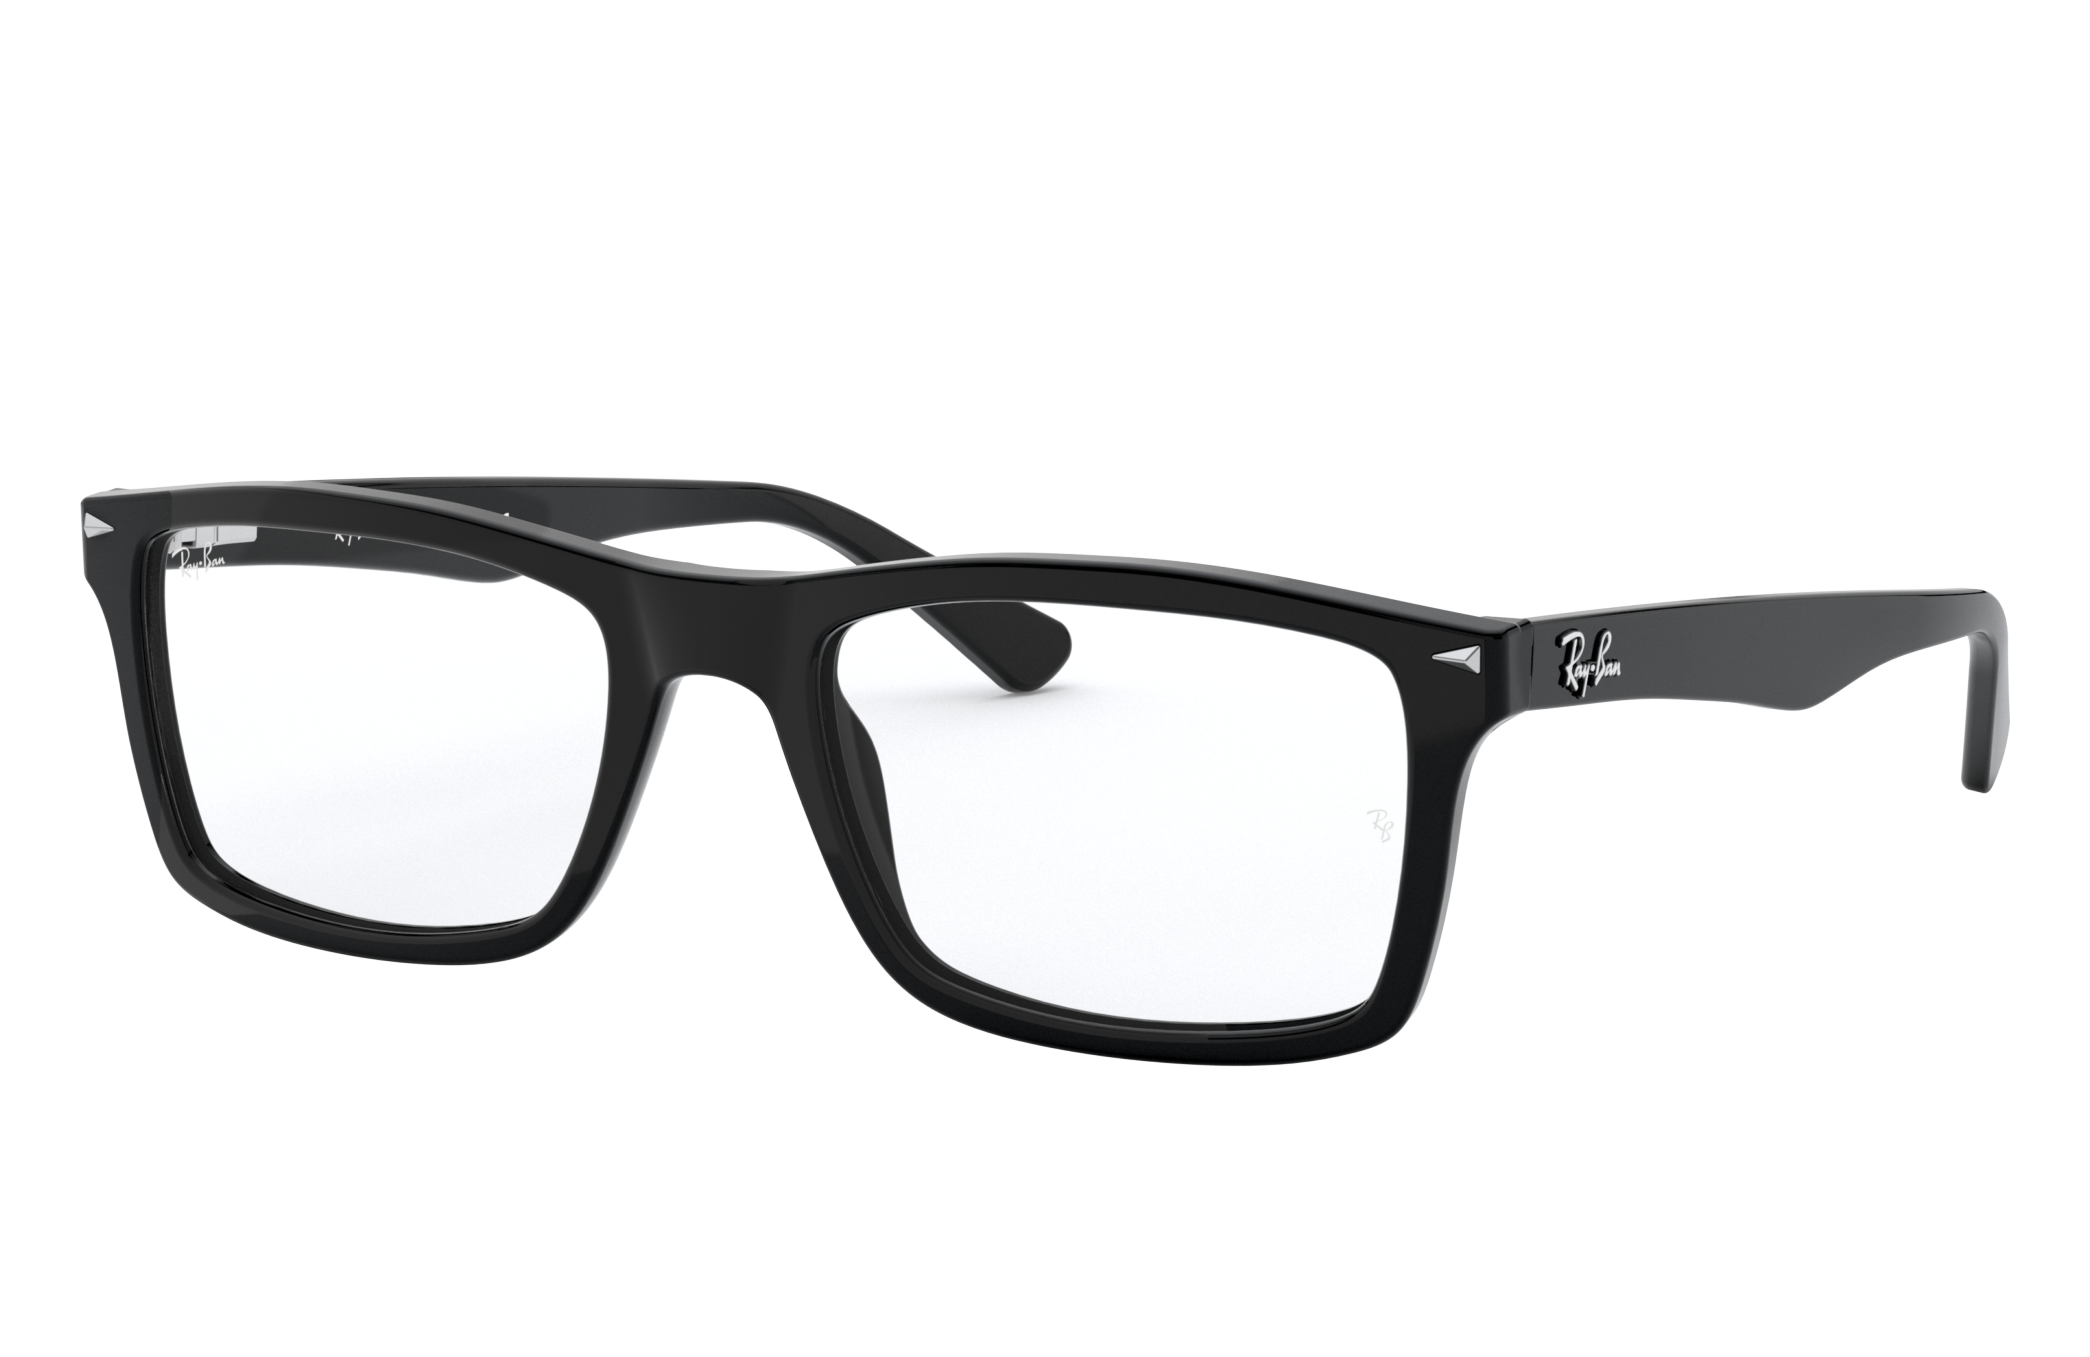 Rb5287 Optics Eyeglasses with Black Frame | Ray-Ban®